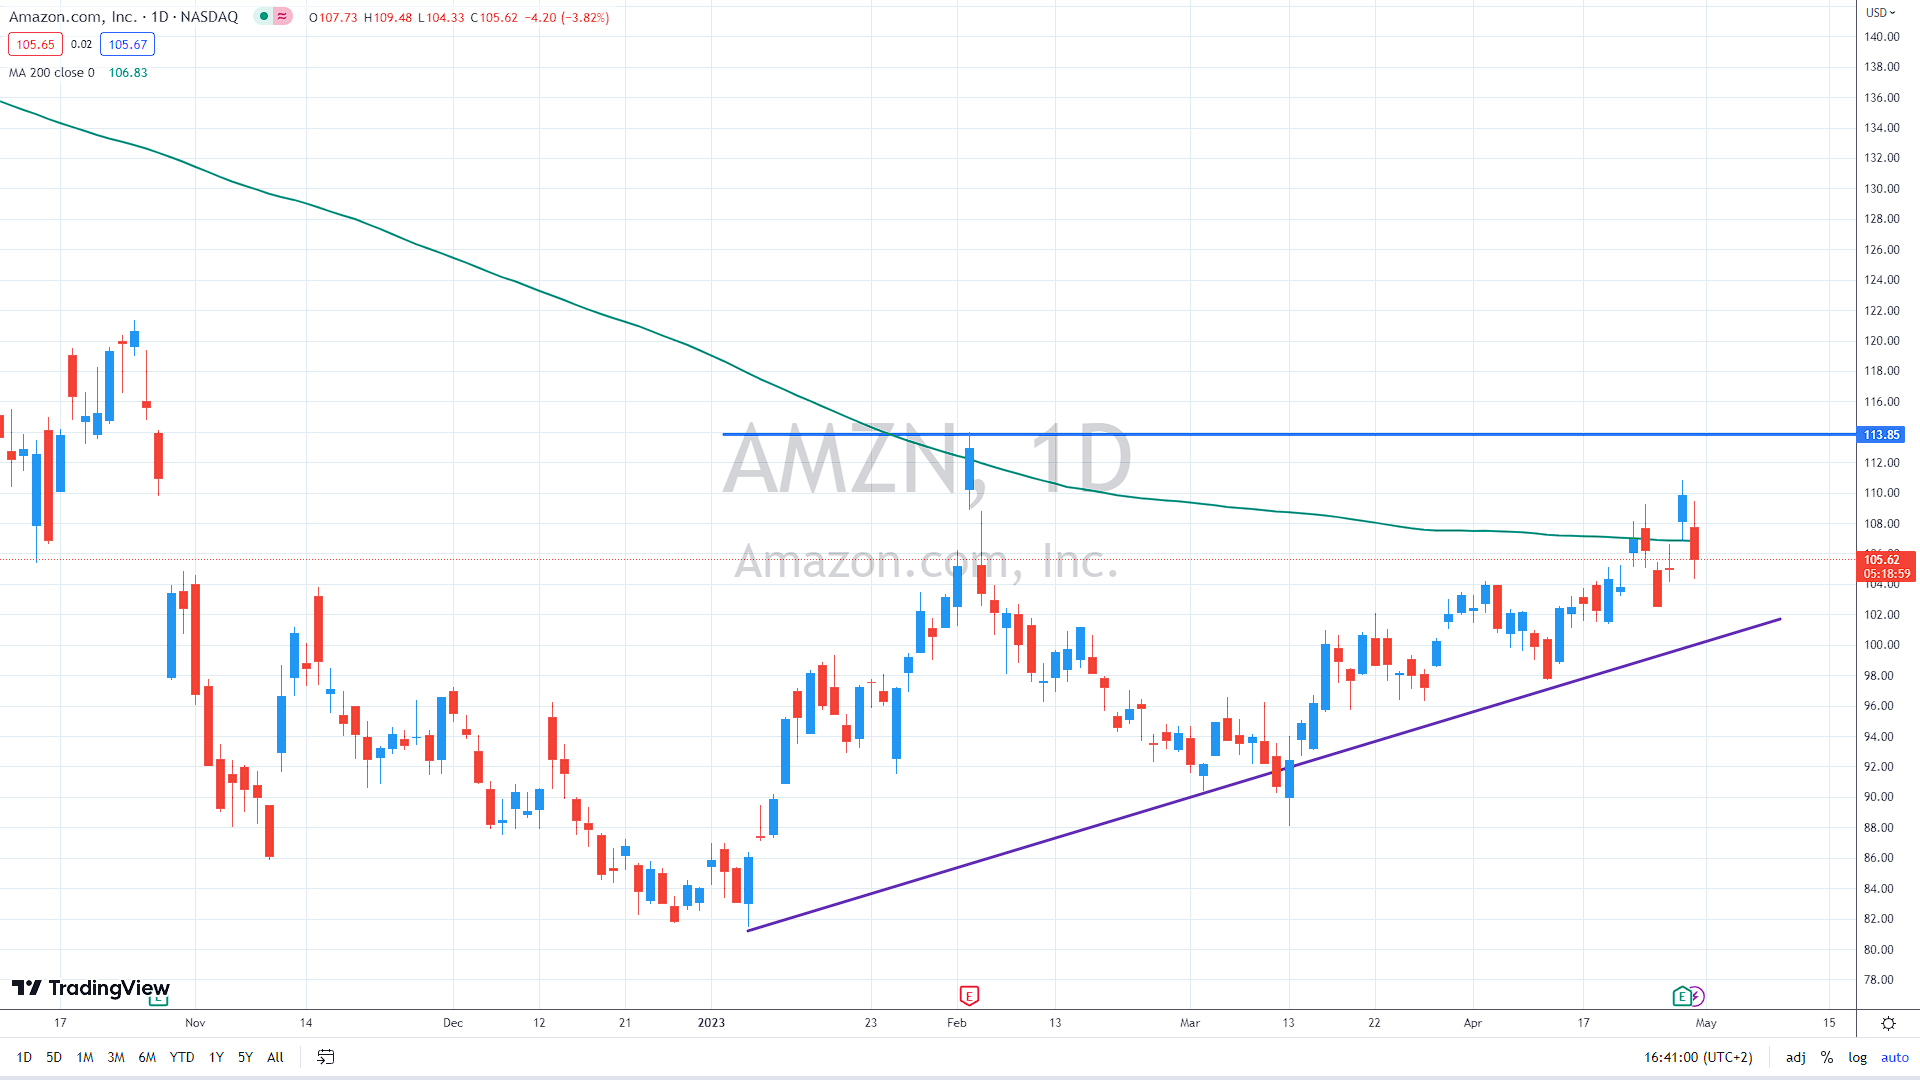 AMZN daily chart